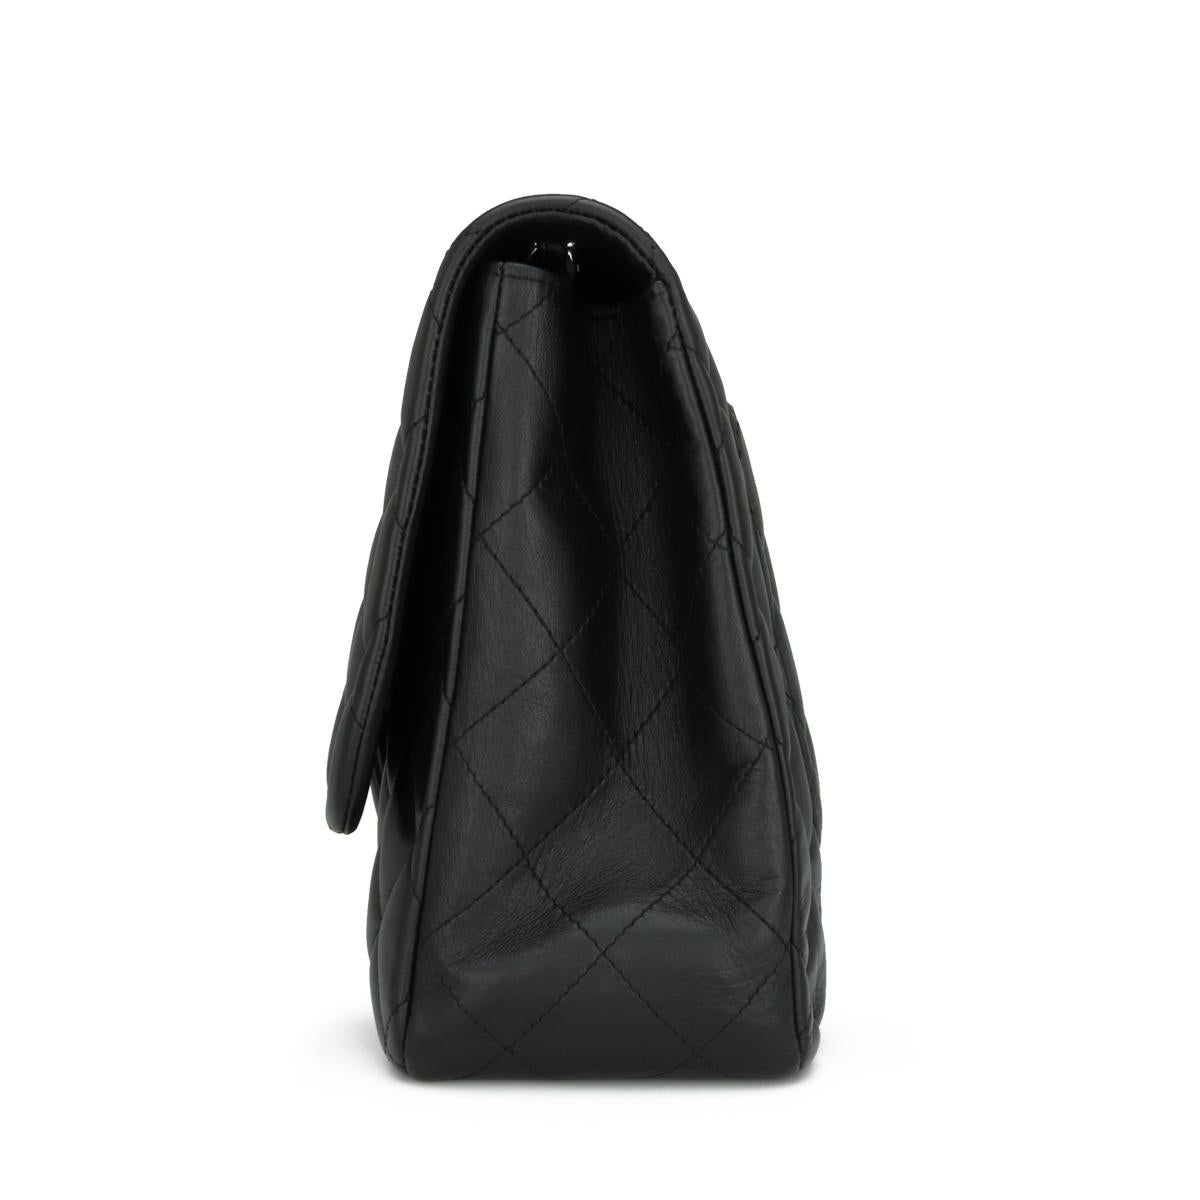 CHANEL Single Flap Jumbo Bag in Black Lambskin with Silver-Tone Hardware 2010 For Sale 1